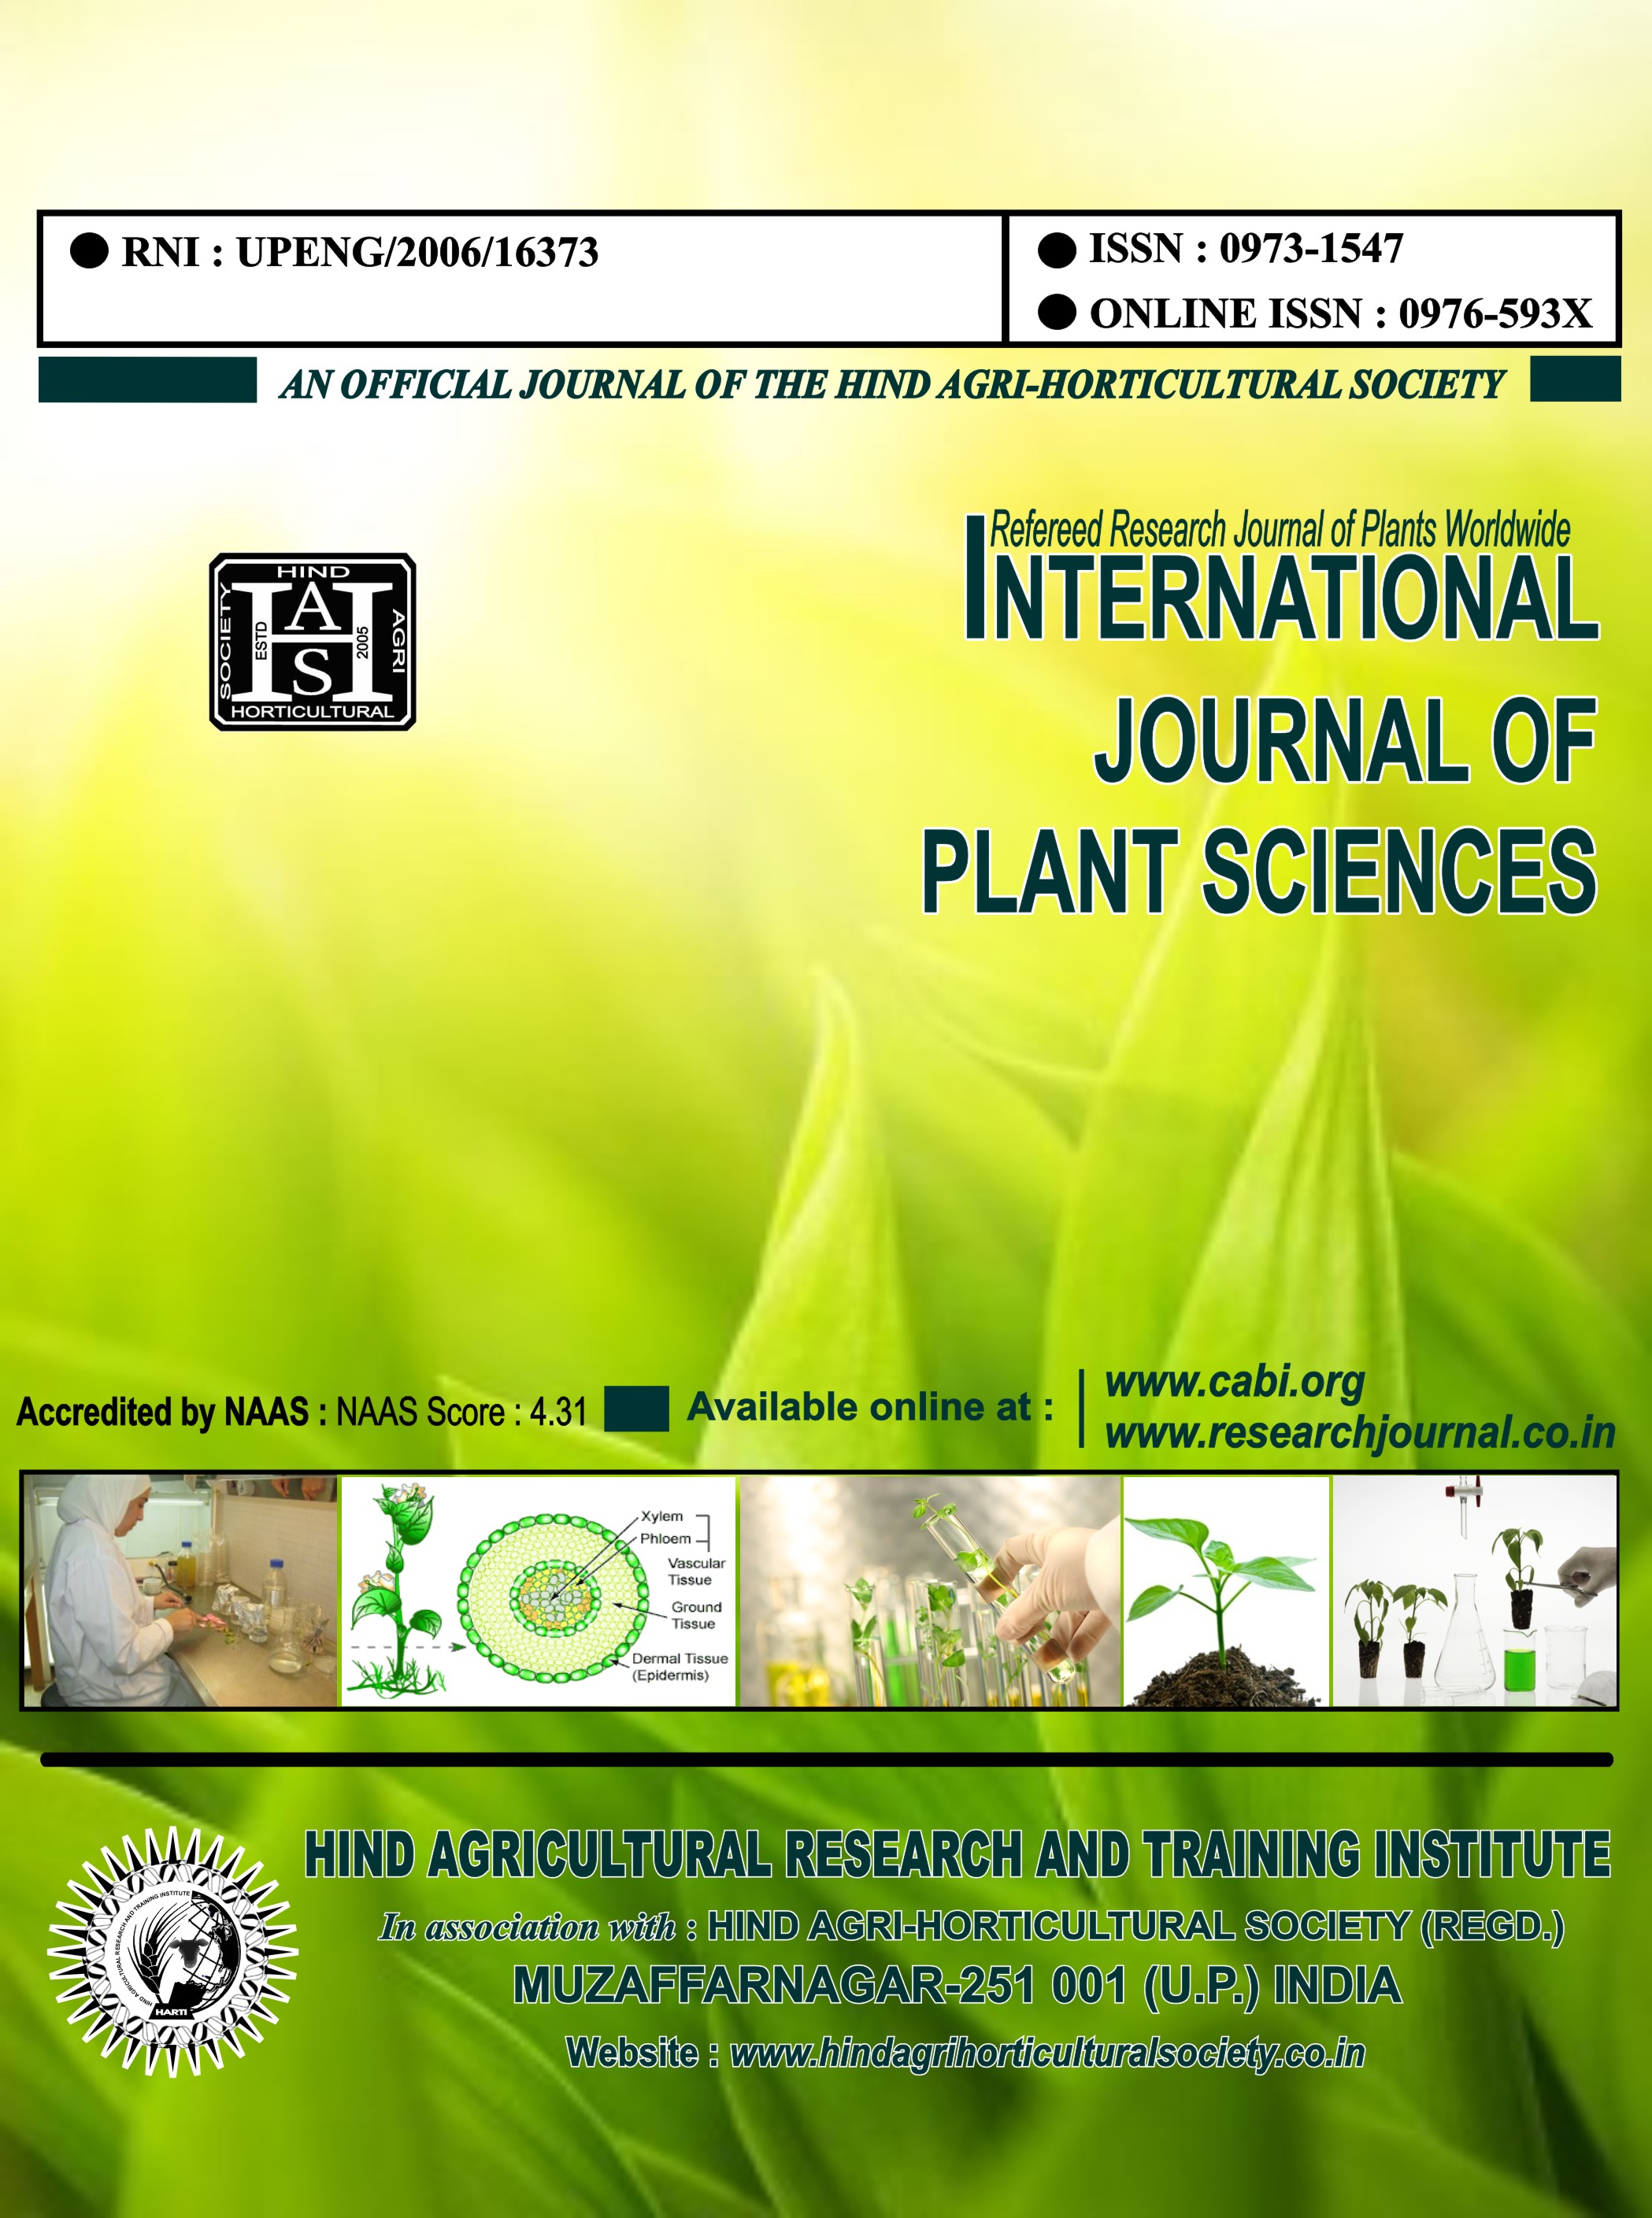 International Journal of Plant Sciences